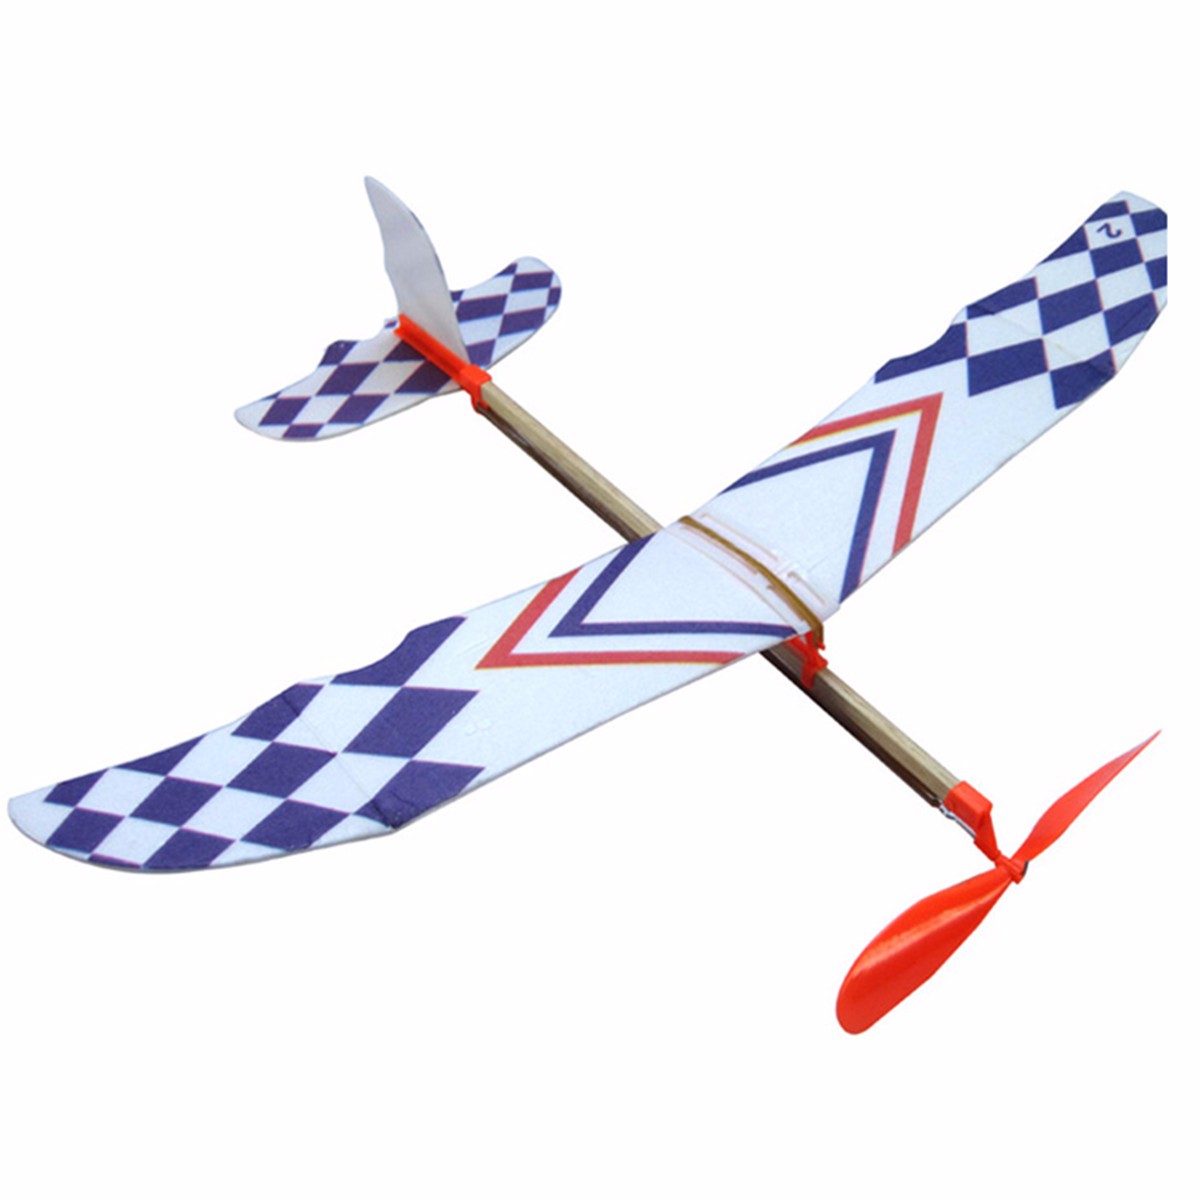 Elastic-Rubber-Band-Powered-DIY-Foam-Plane-Kit-Aircraft-Model-Educational-Toy-1120805-2